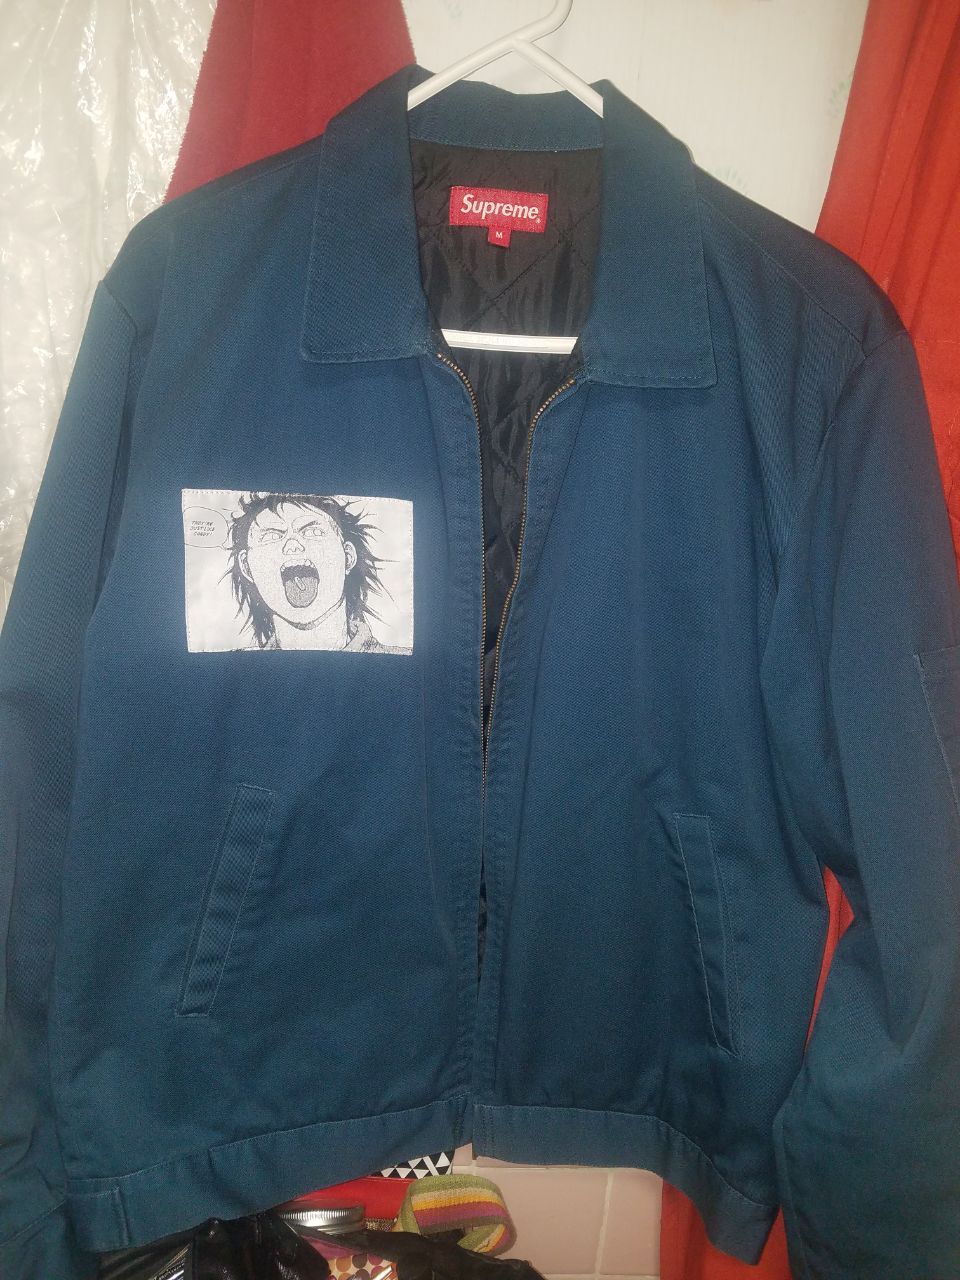 Supreme Akira work jacket | Grailed